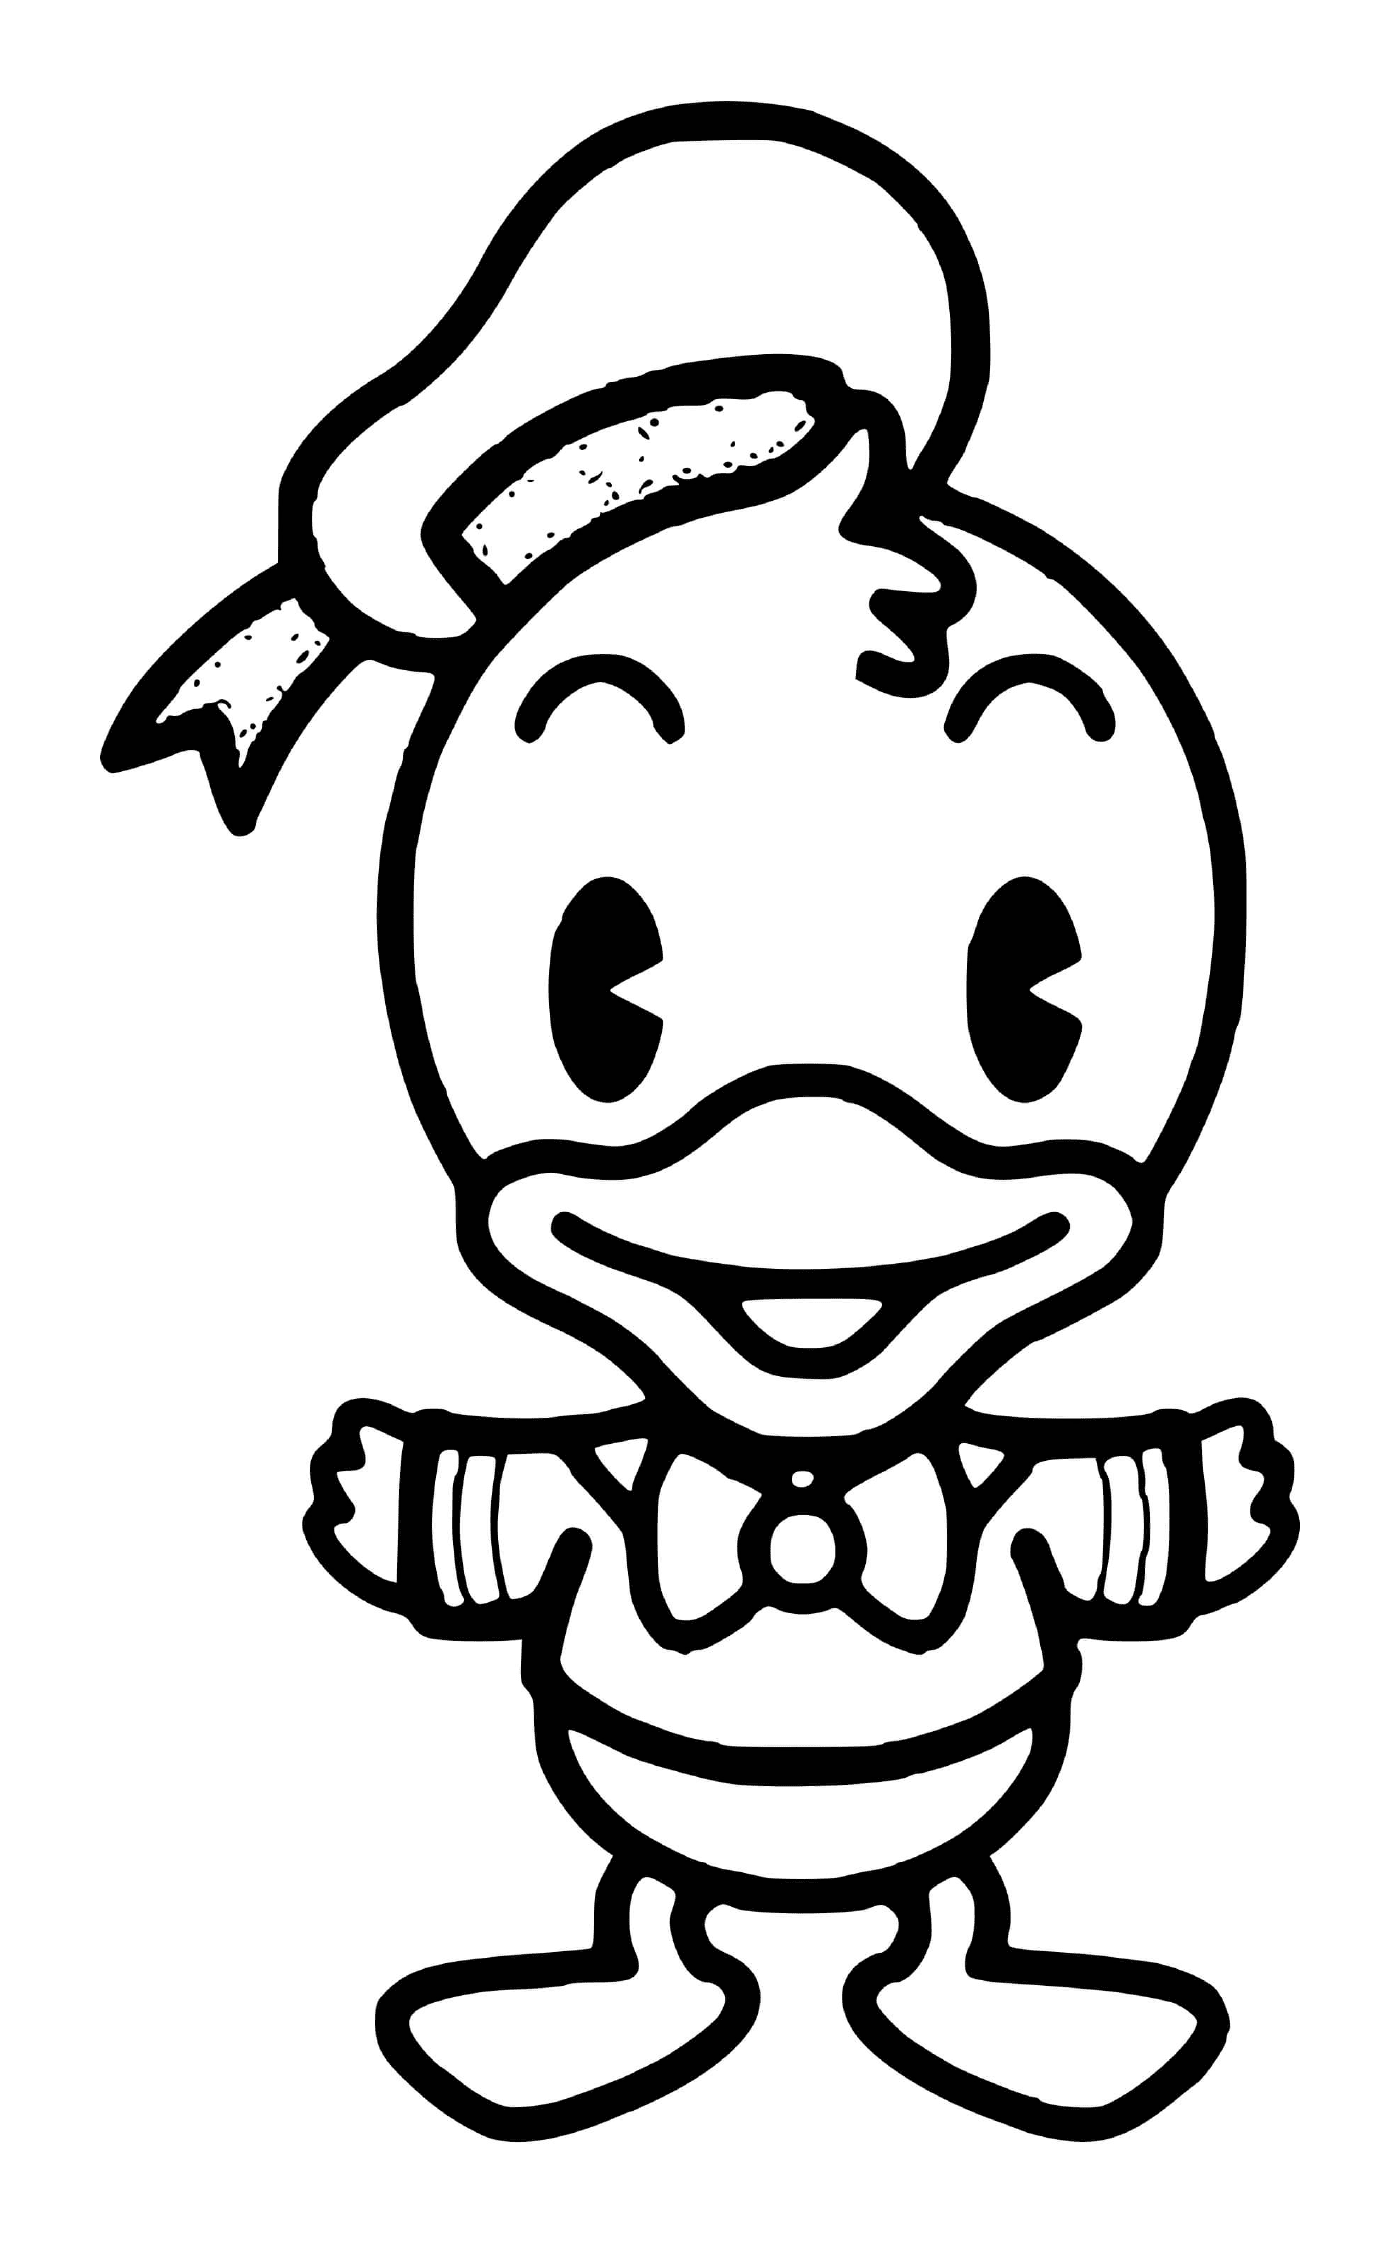  Donald Duck adorable baby 